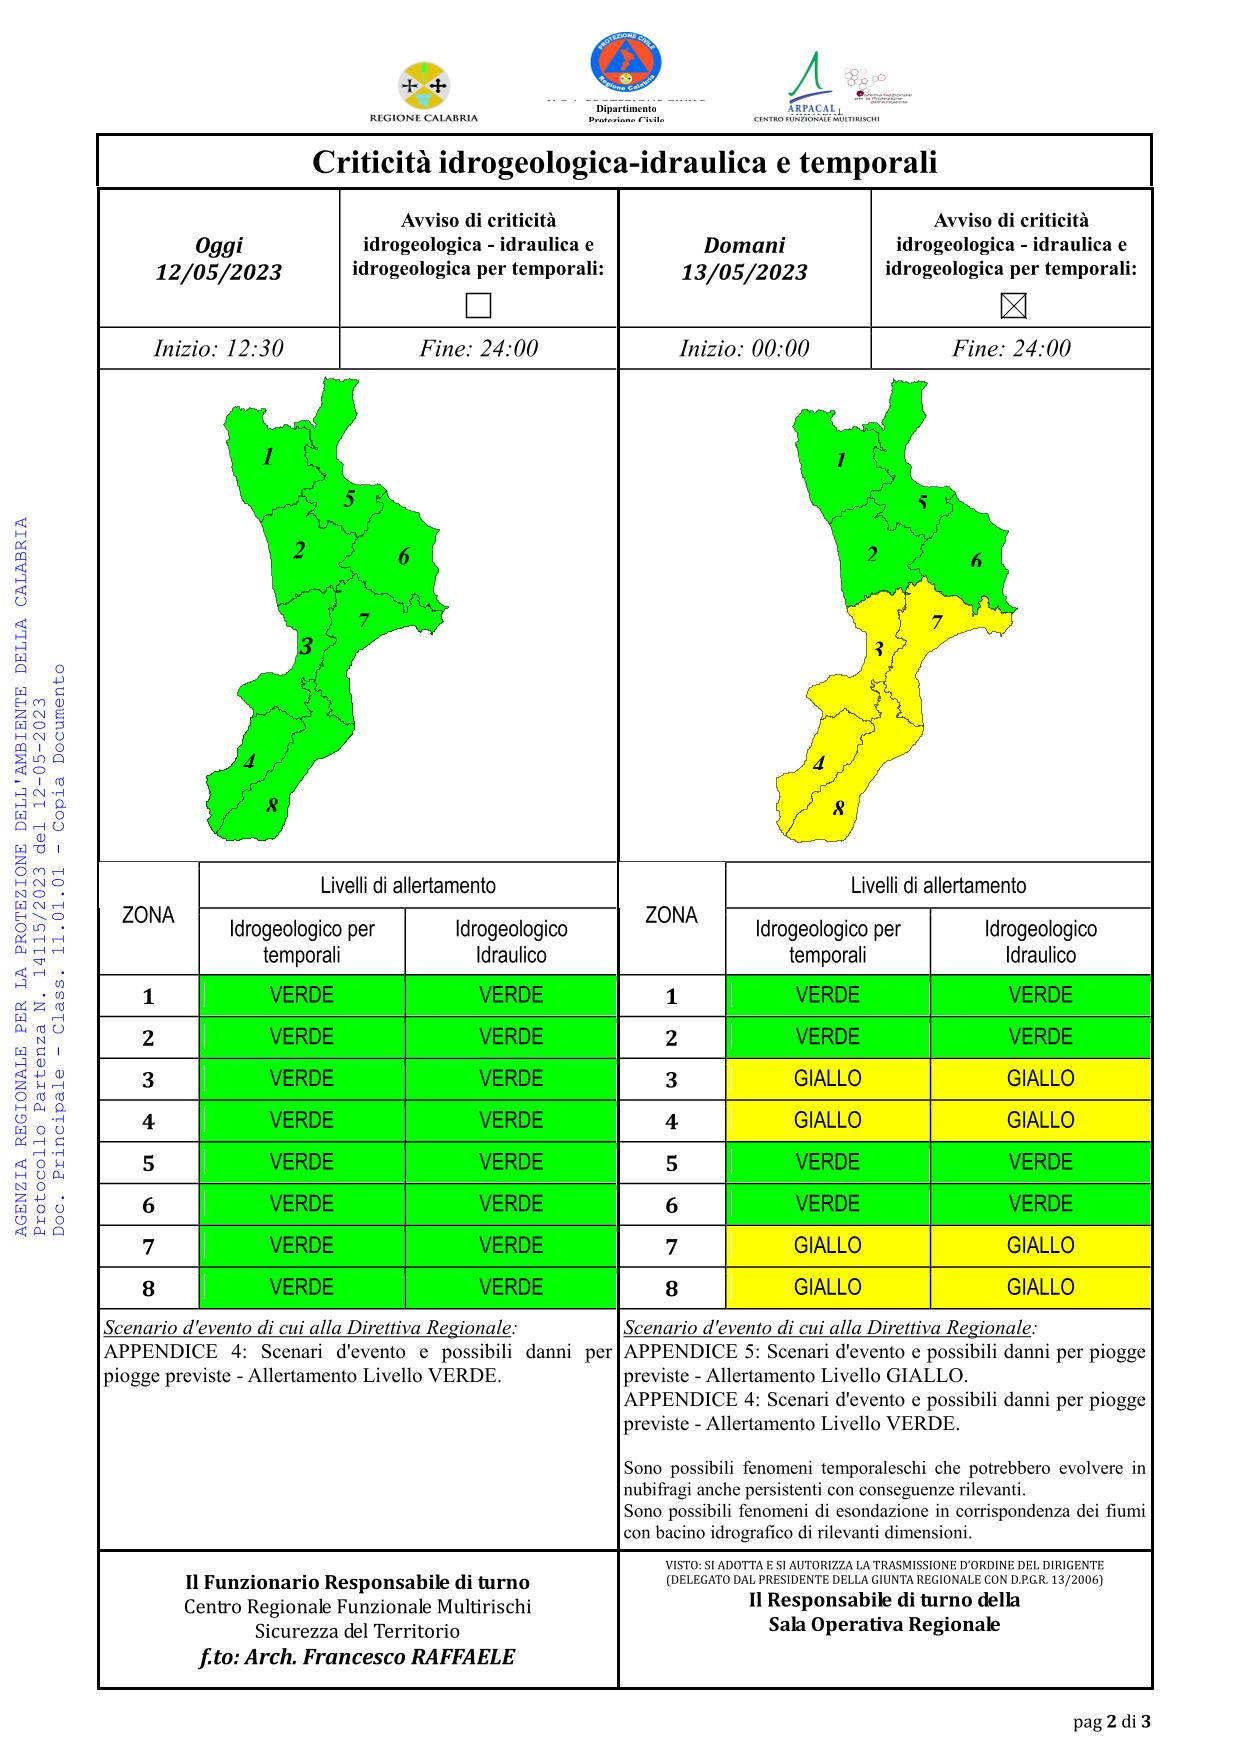 Criticità idrogeologica-idraulica e temporali in Calabria 12-05-2023